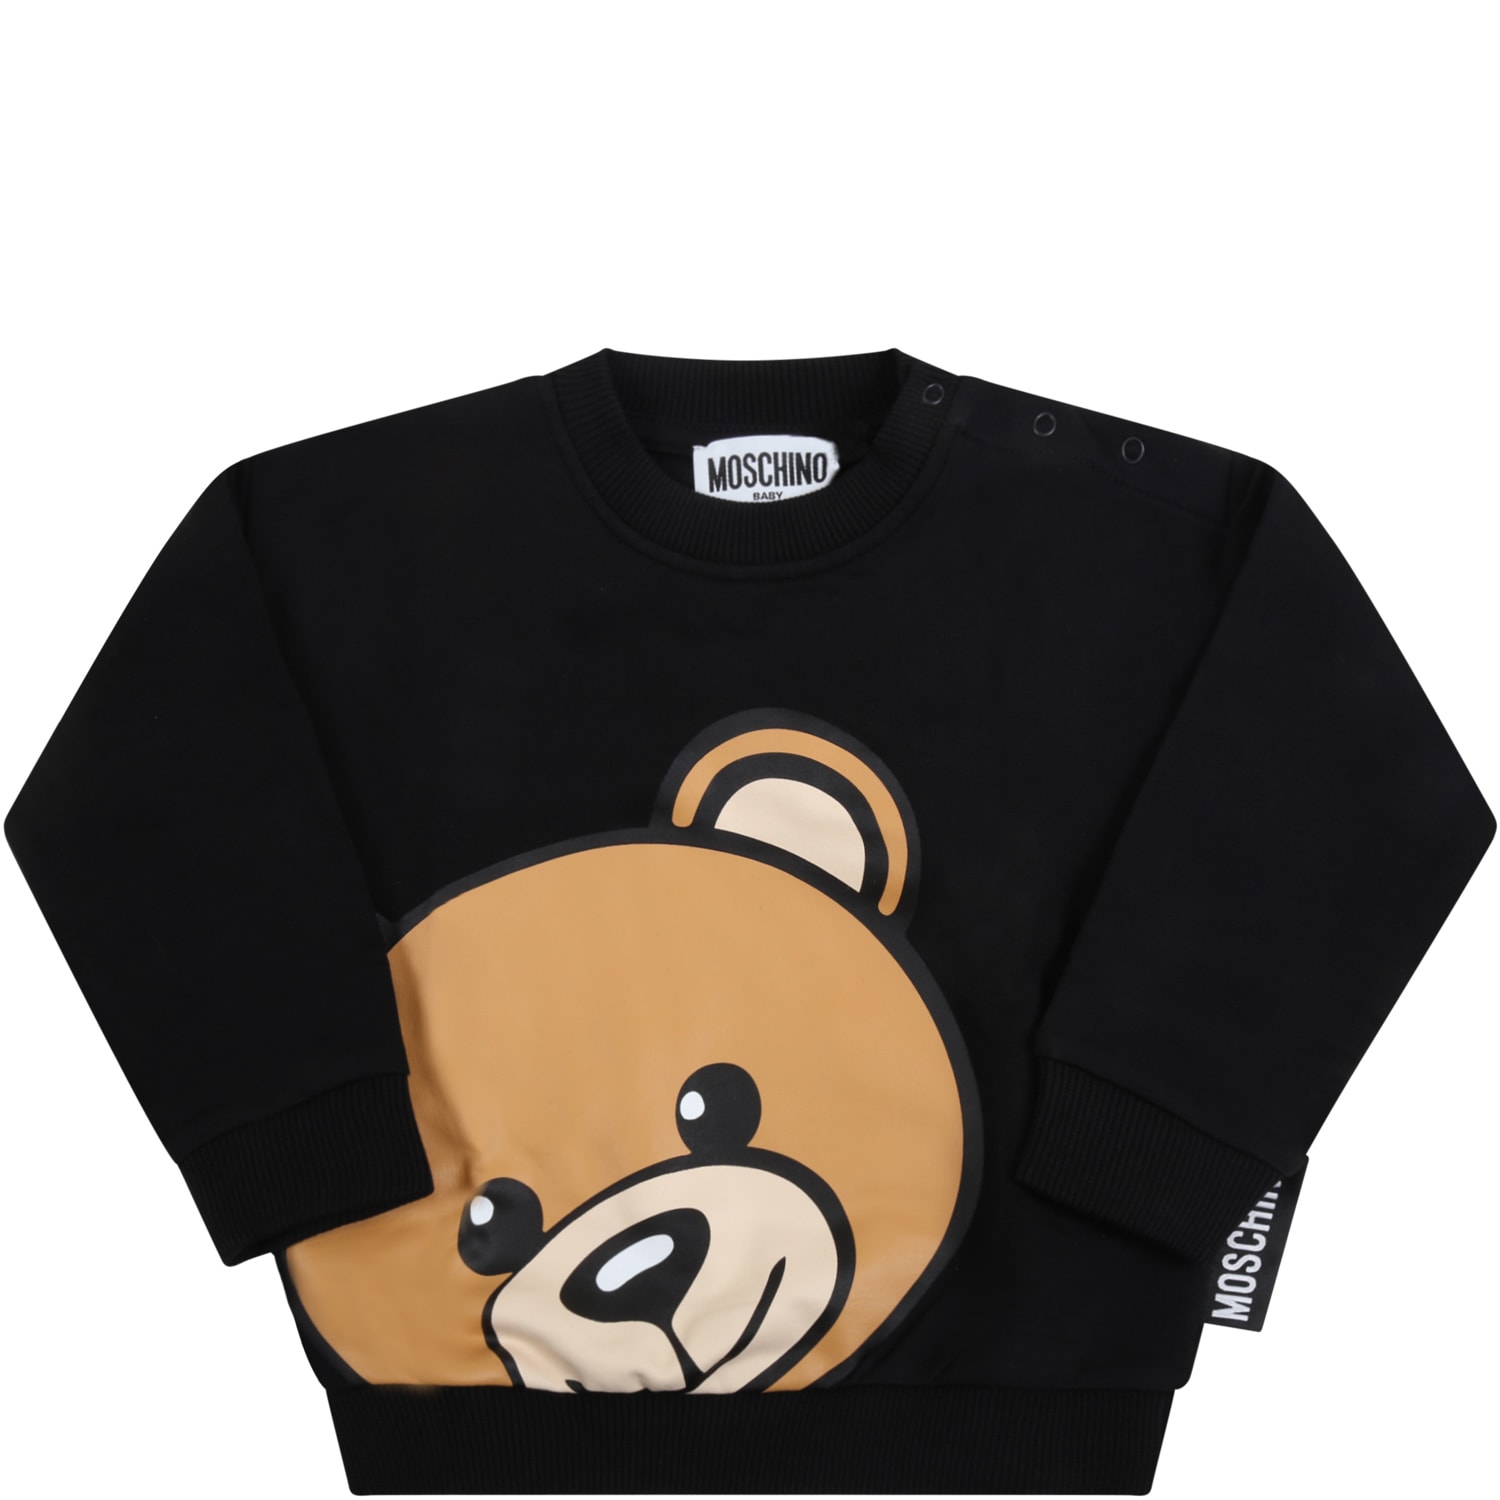 Moschino Black Sweatshirt For Baby Kids With Teddy Bear